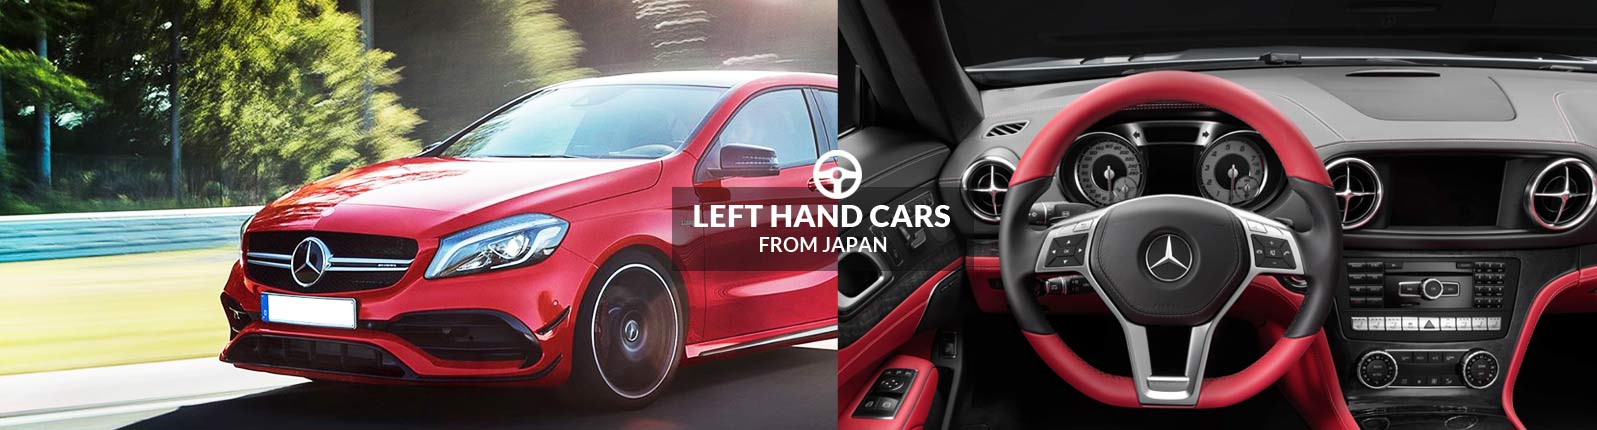 Left Hand Cars